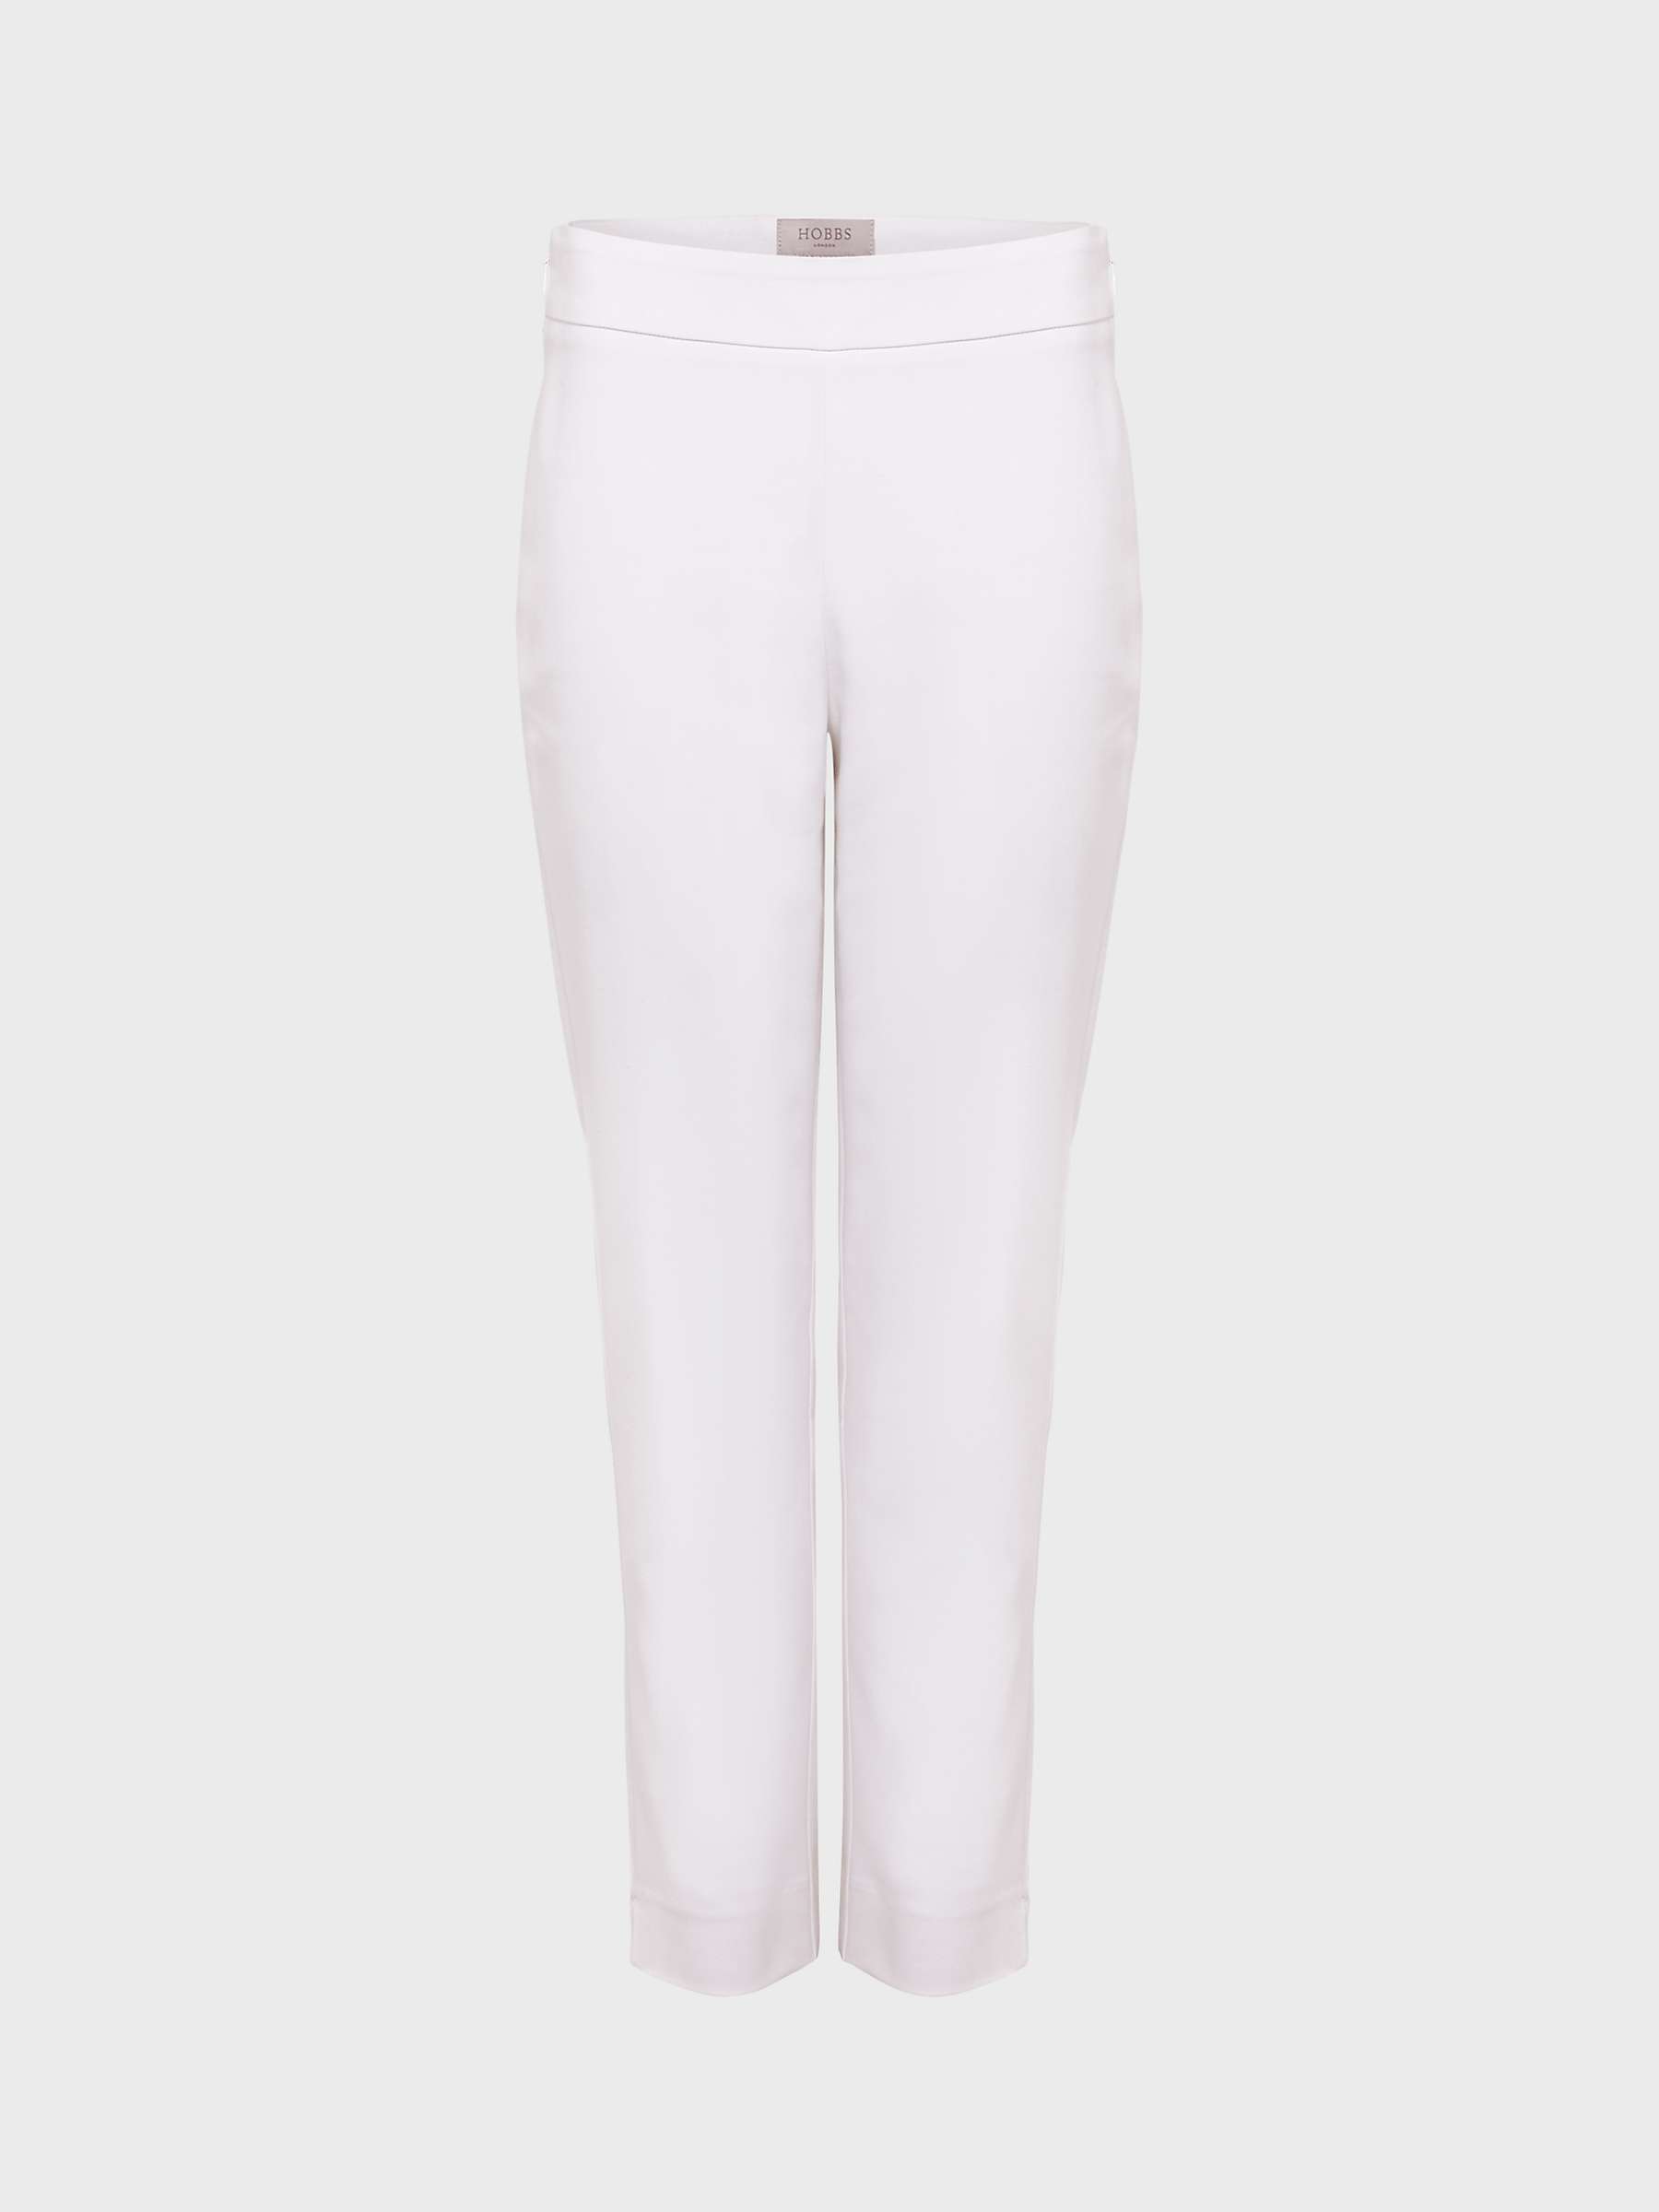 Buy Hobbs Kaya Capri Trousers, White Online at johnlewis.com